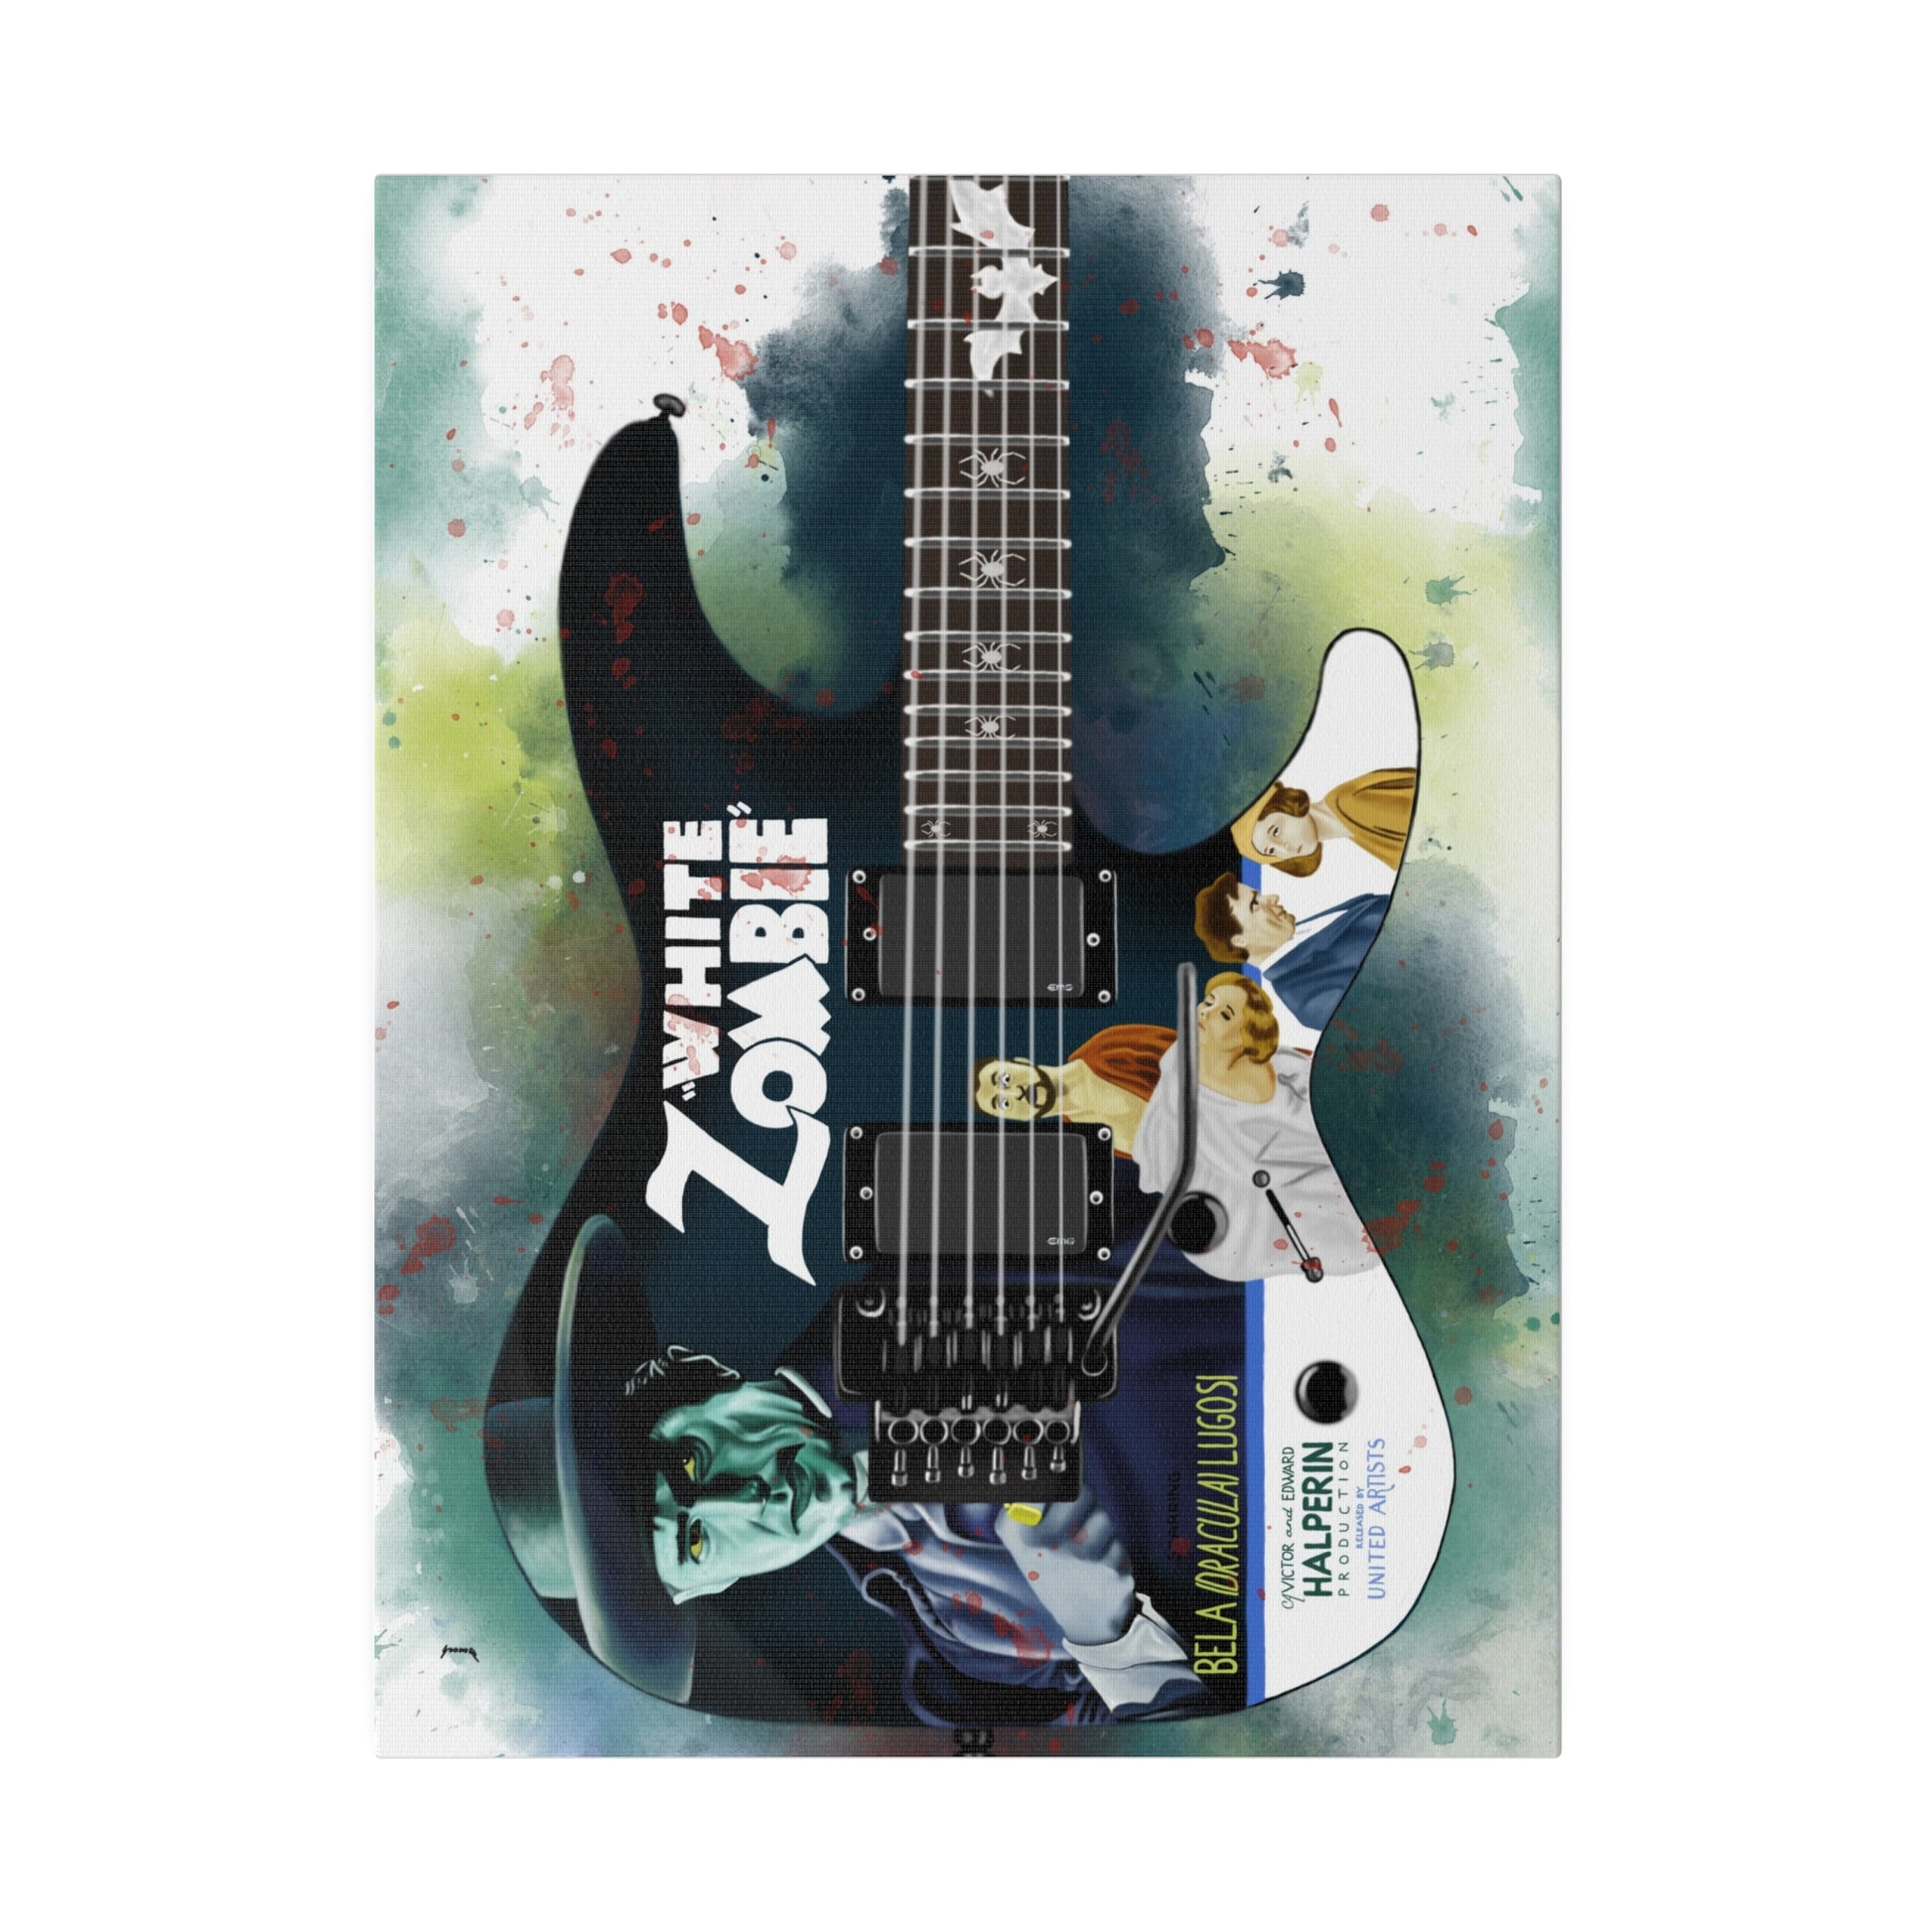 Digital painting of Kirk's electric guitar printed on canvas